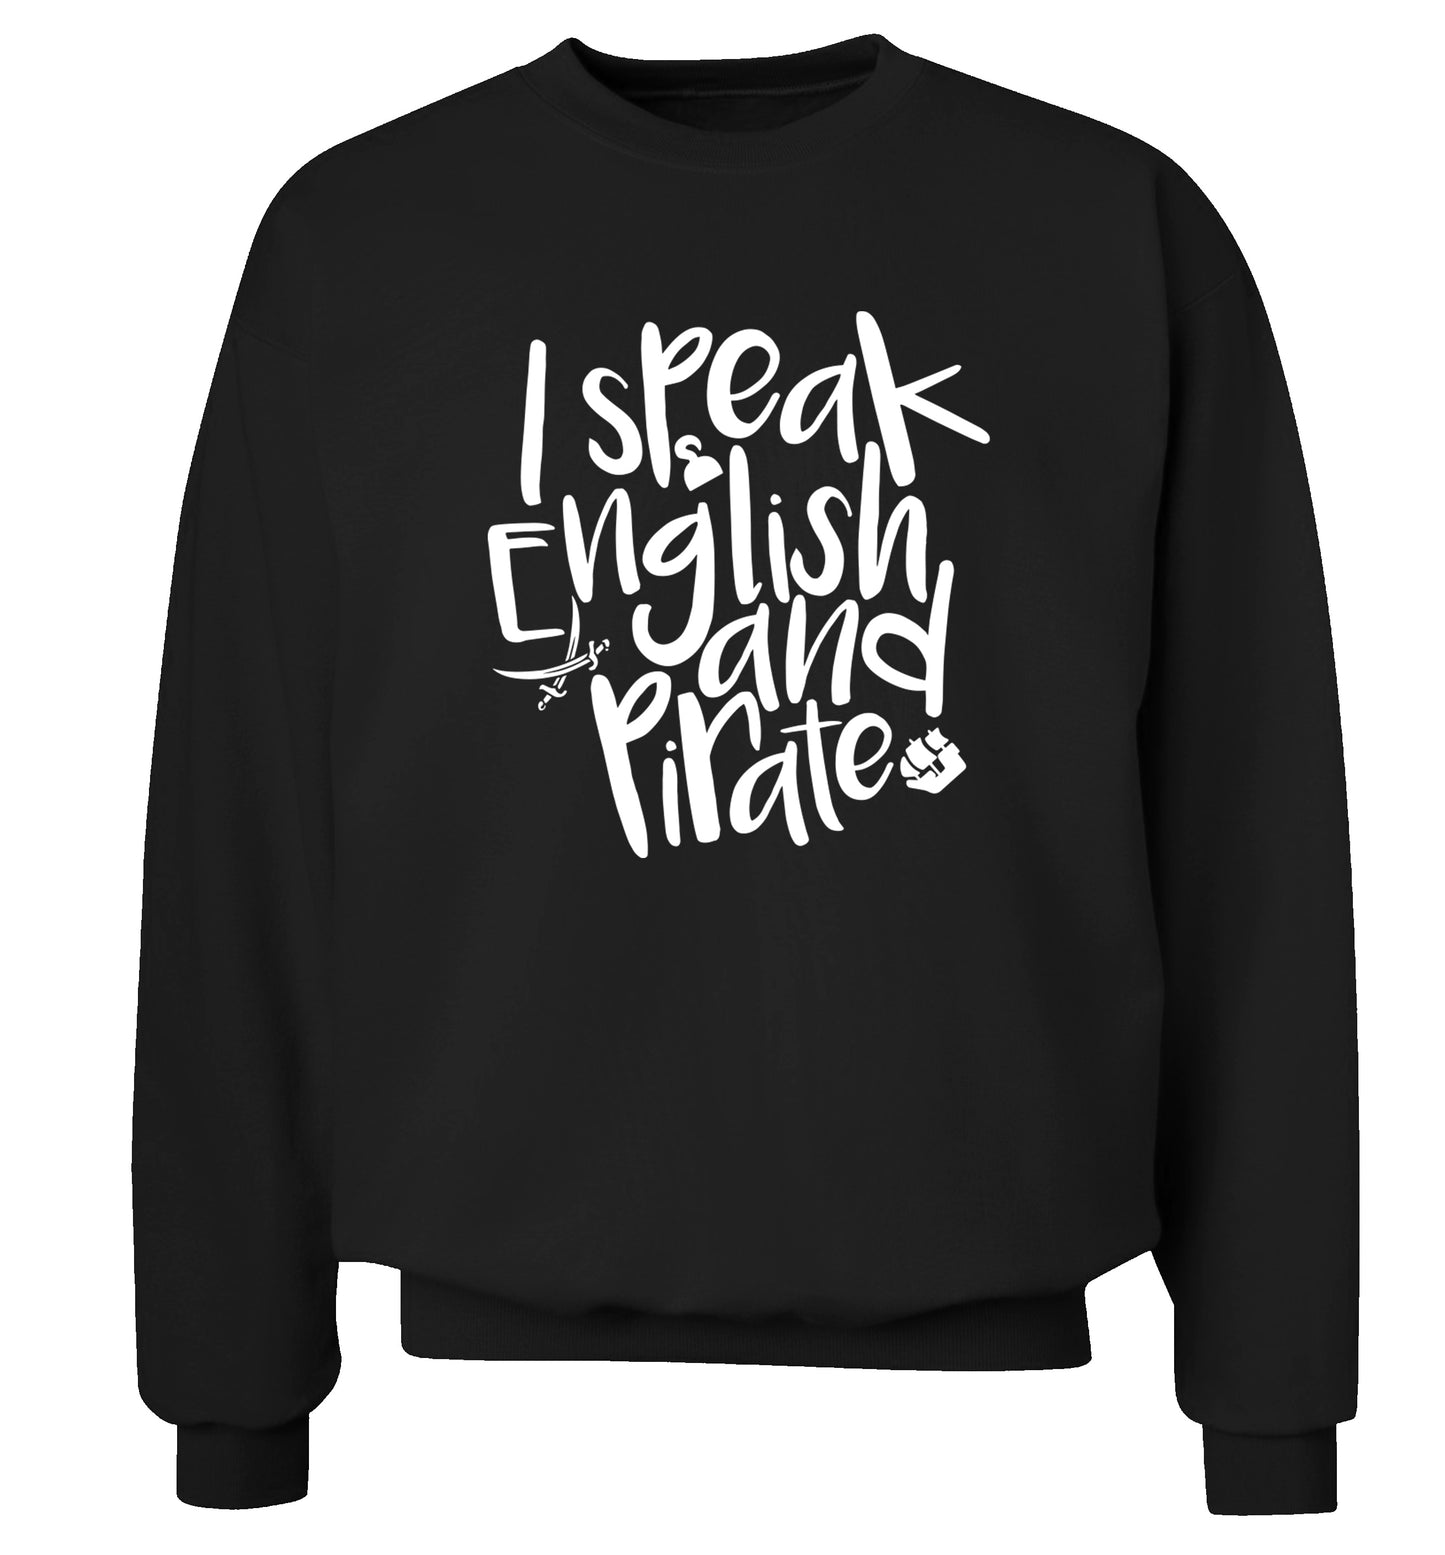 I speak English and pirate Adult's unisex black Sweater 2XL